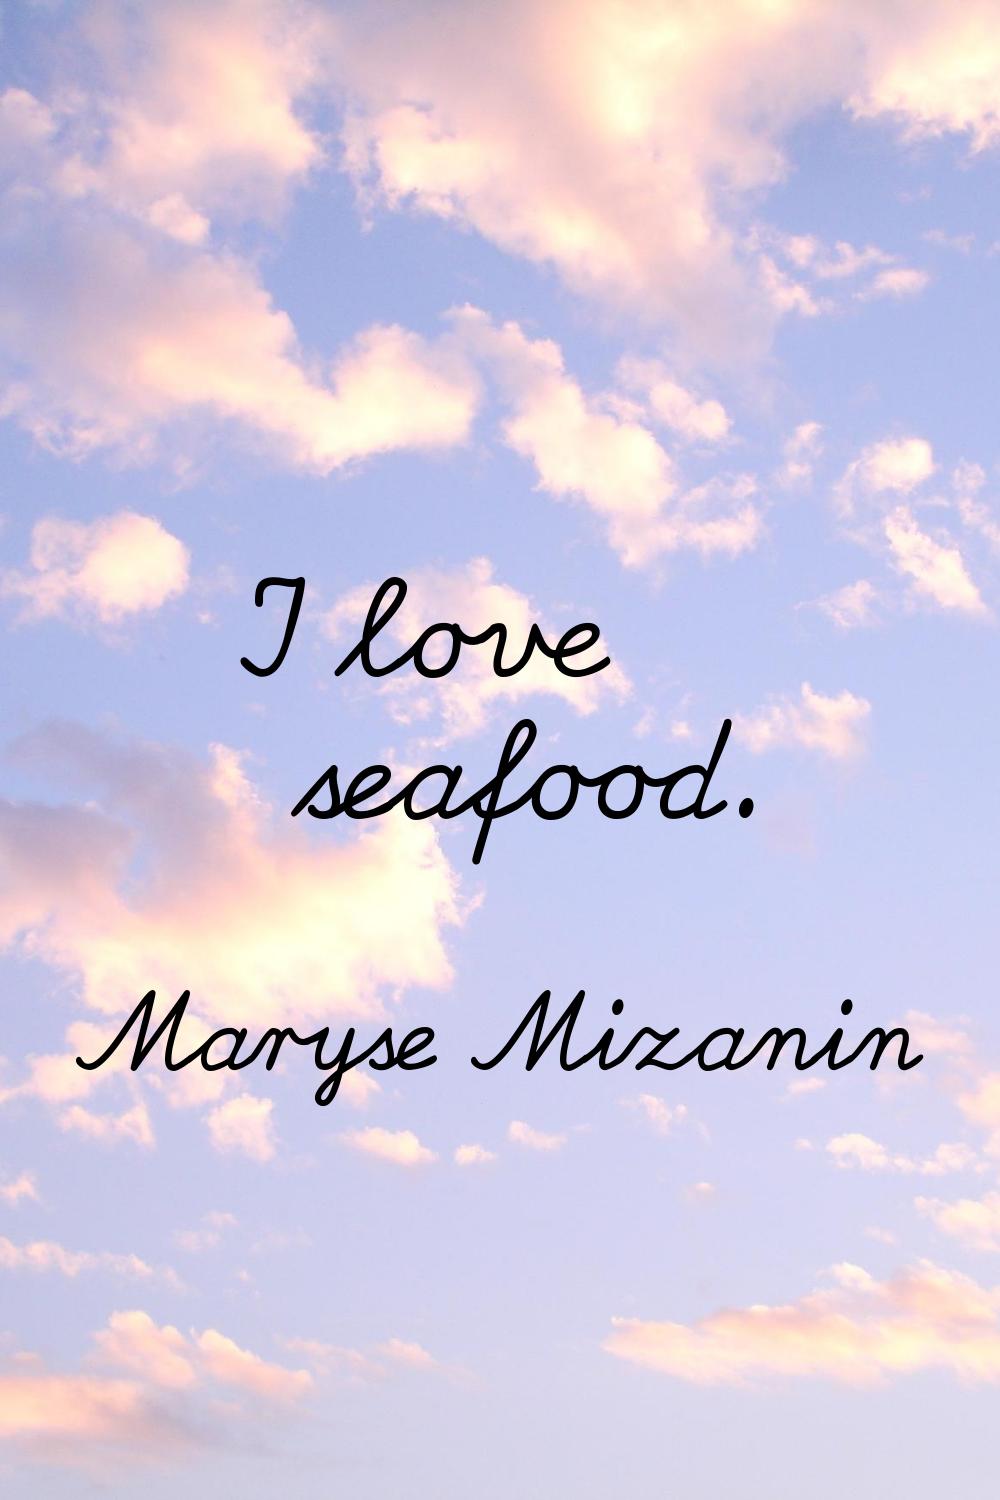 I love seafood.